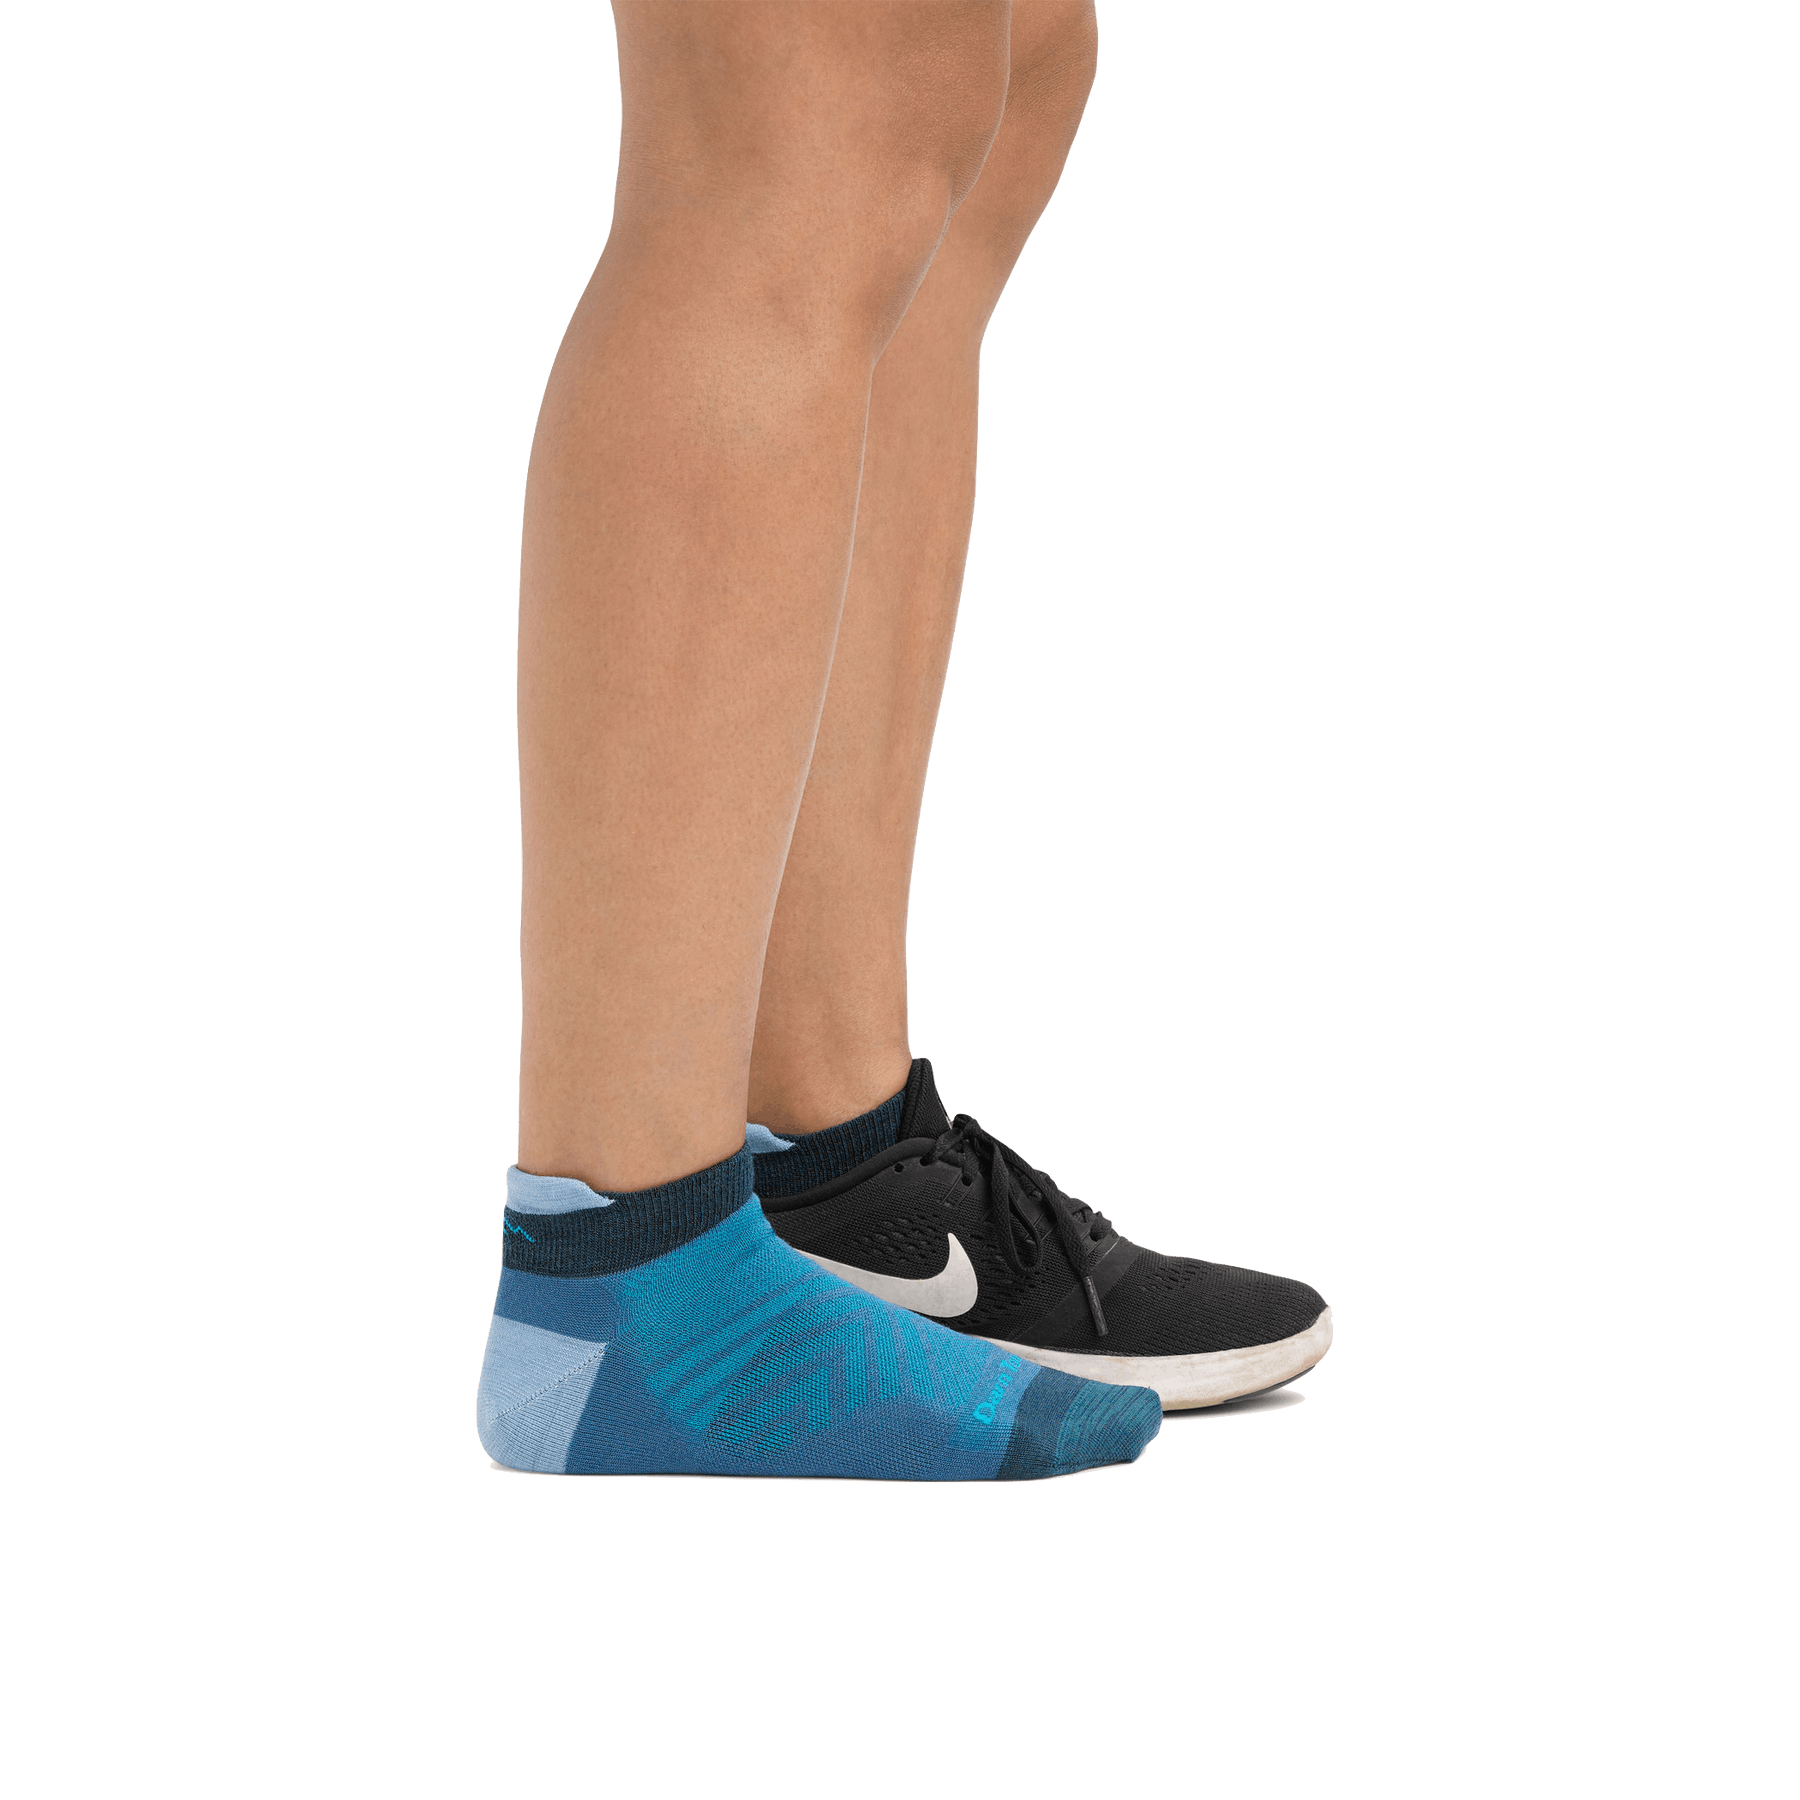 Darn Tough Women's Run No Show Tab Ultra-Lightweight Running Socks with Cushion